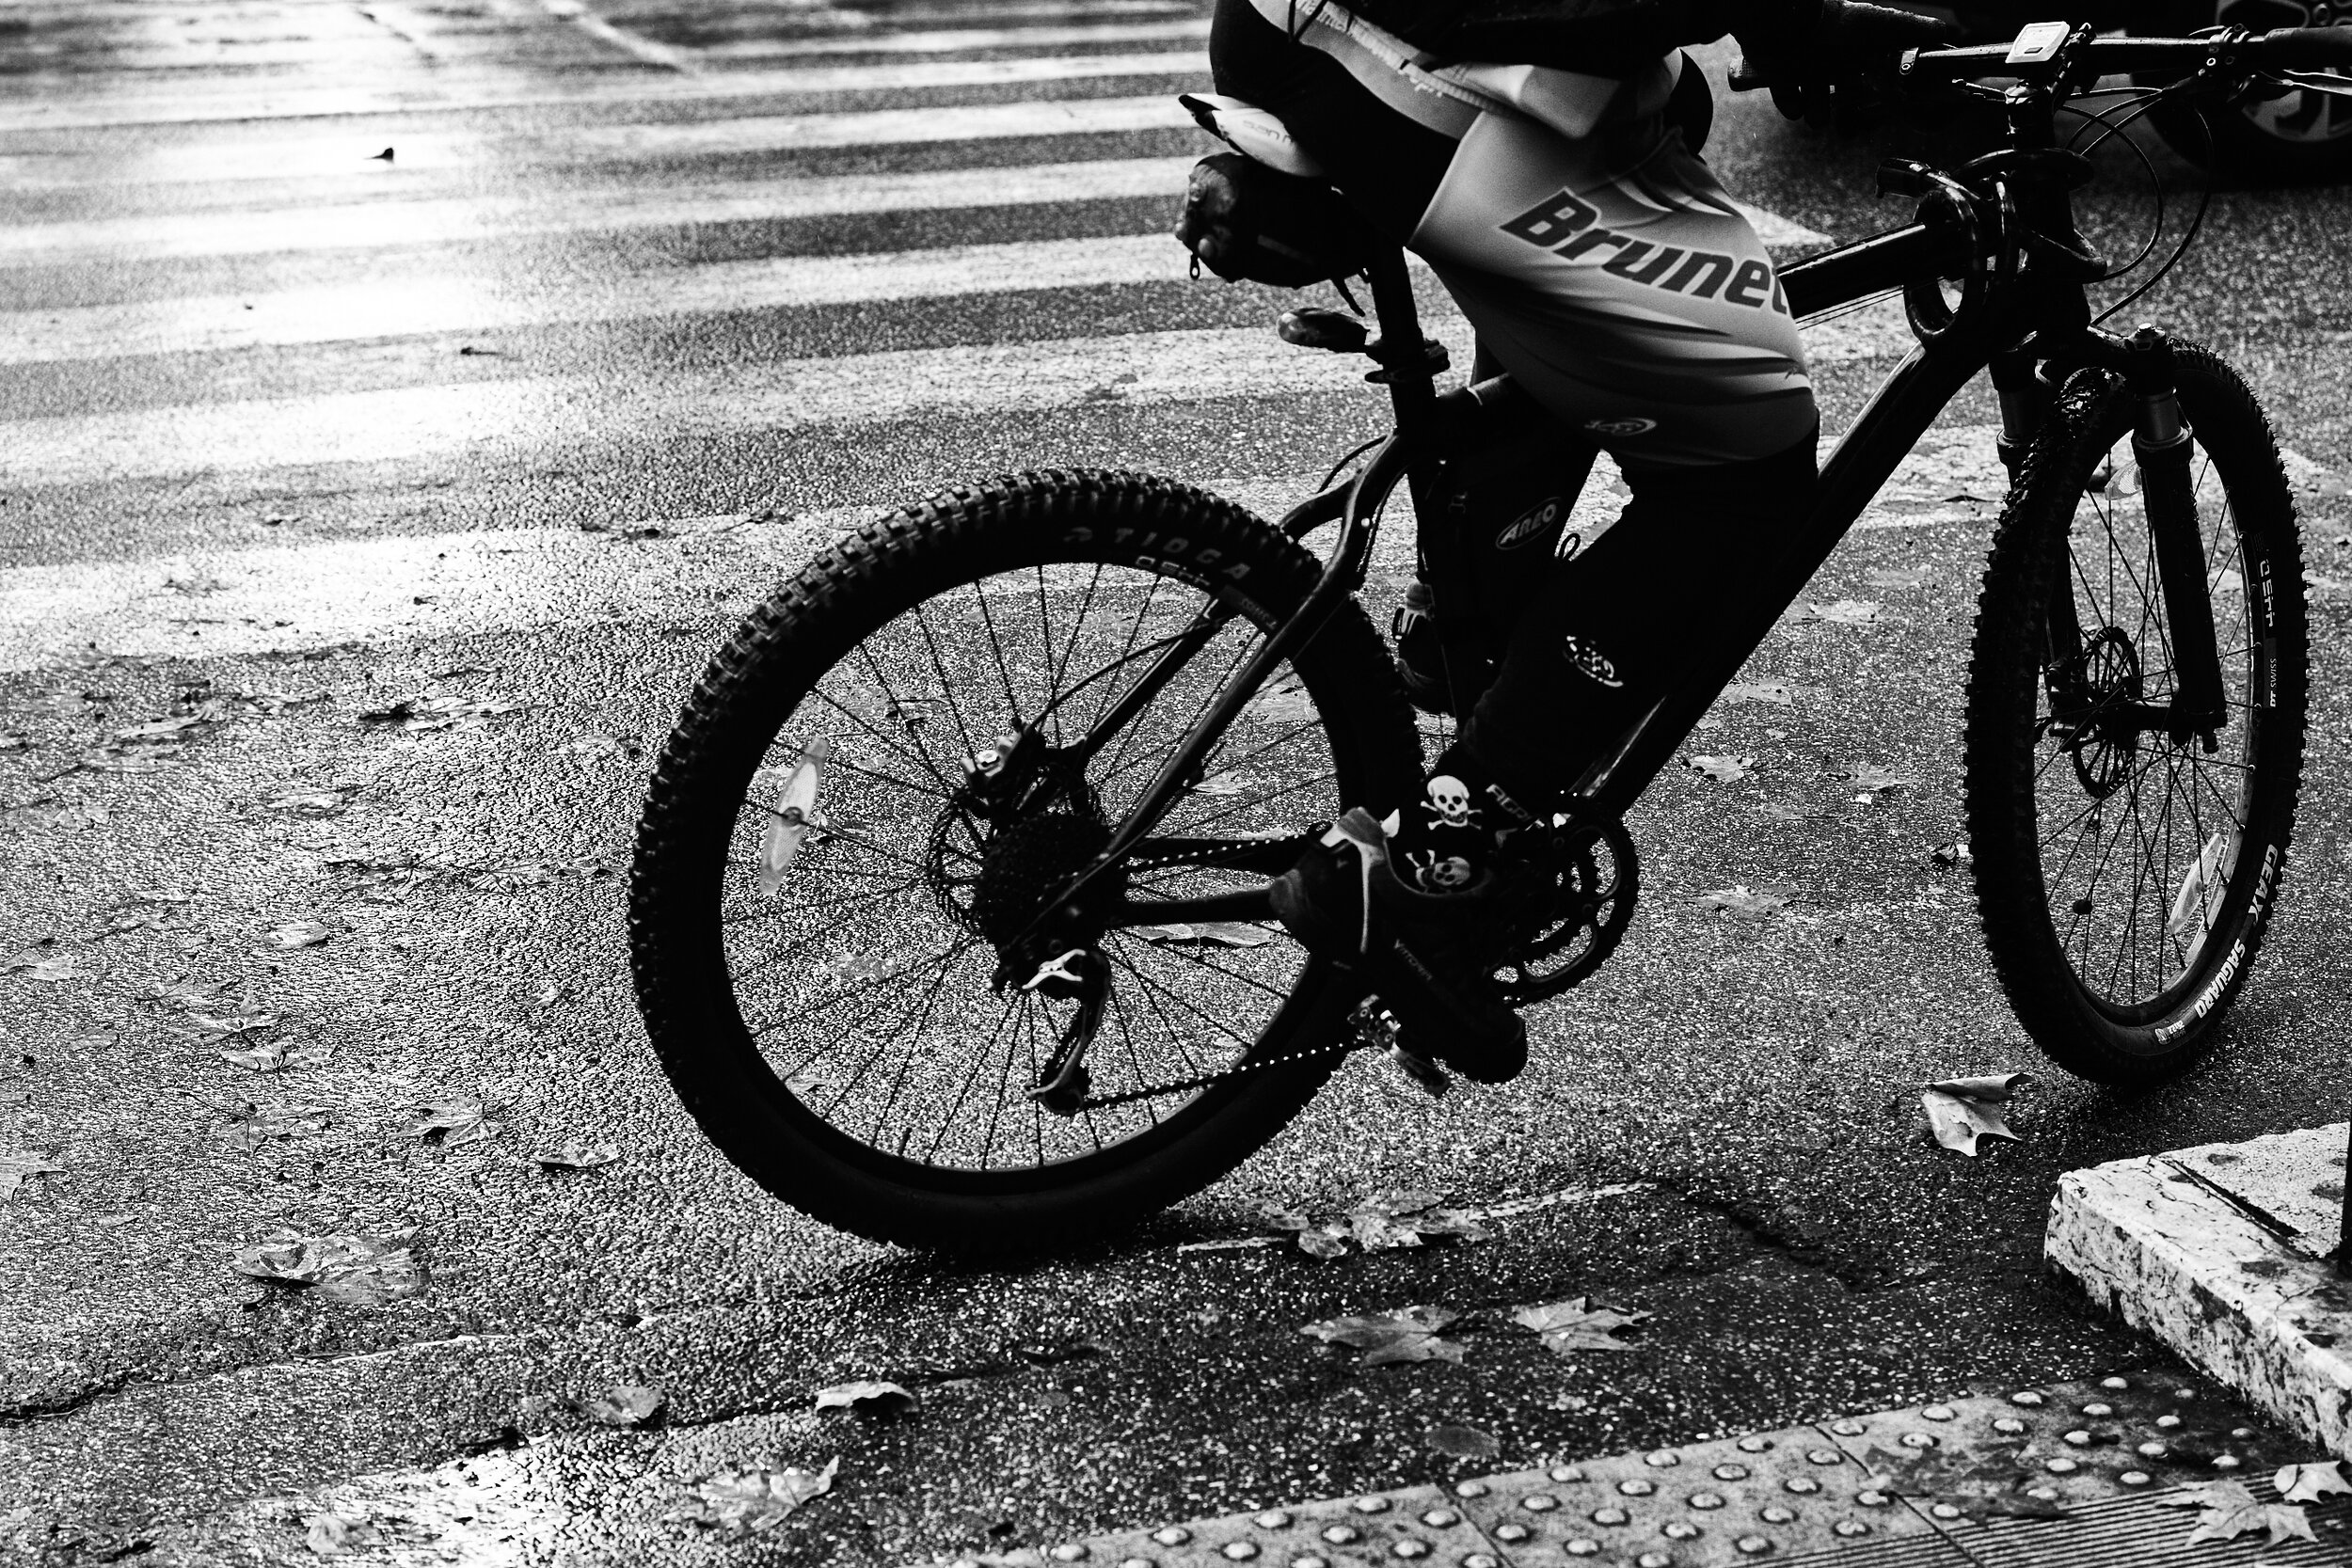 Teschio e bici \ Skull and bike